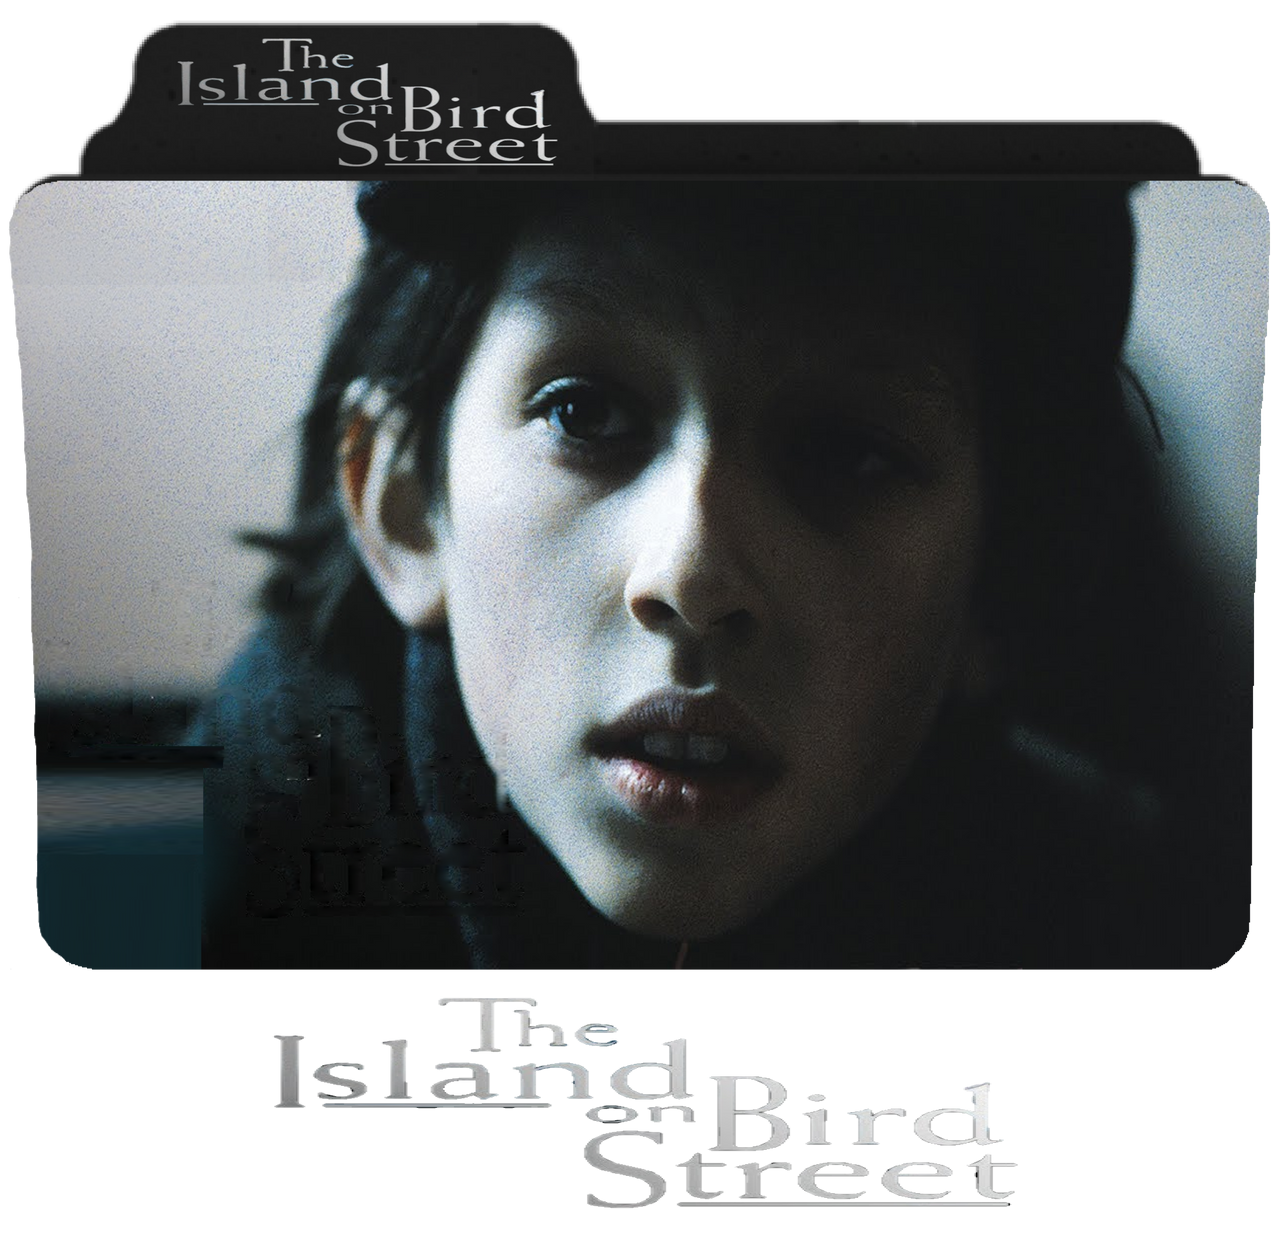 The Island on Bird Street (1997) folder icon by gsmenace on DeviantArt